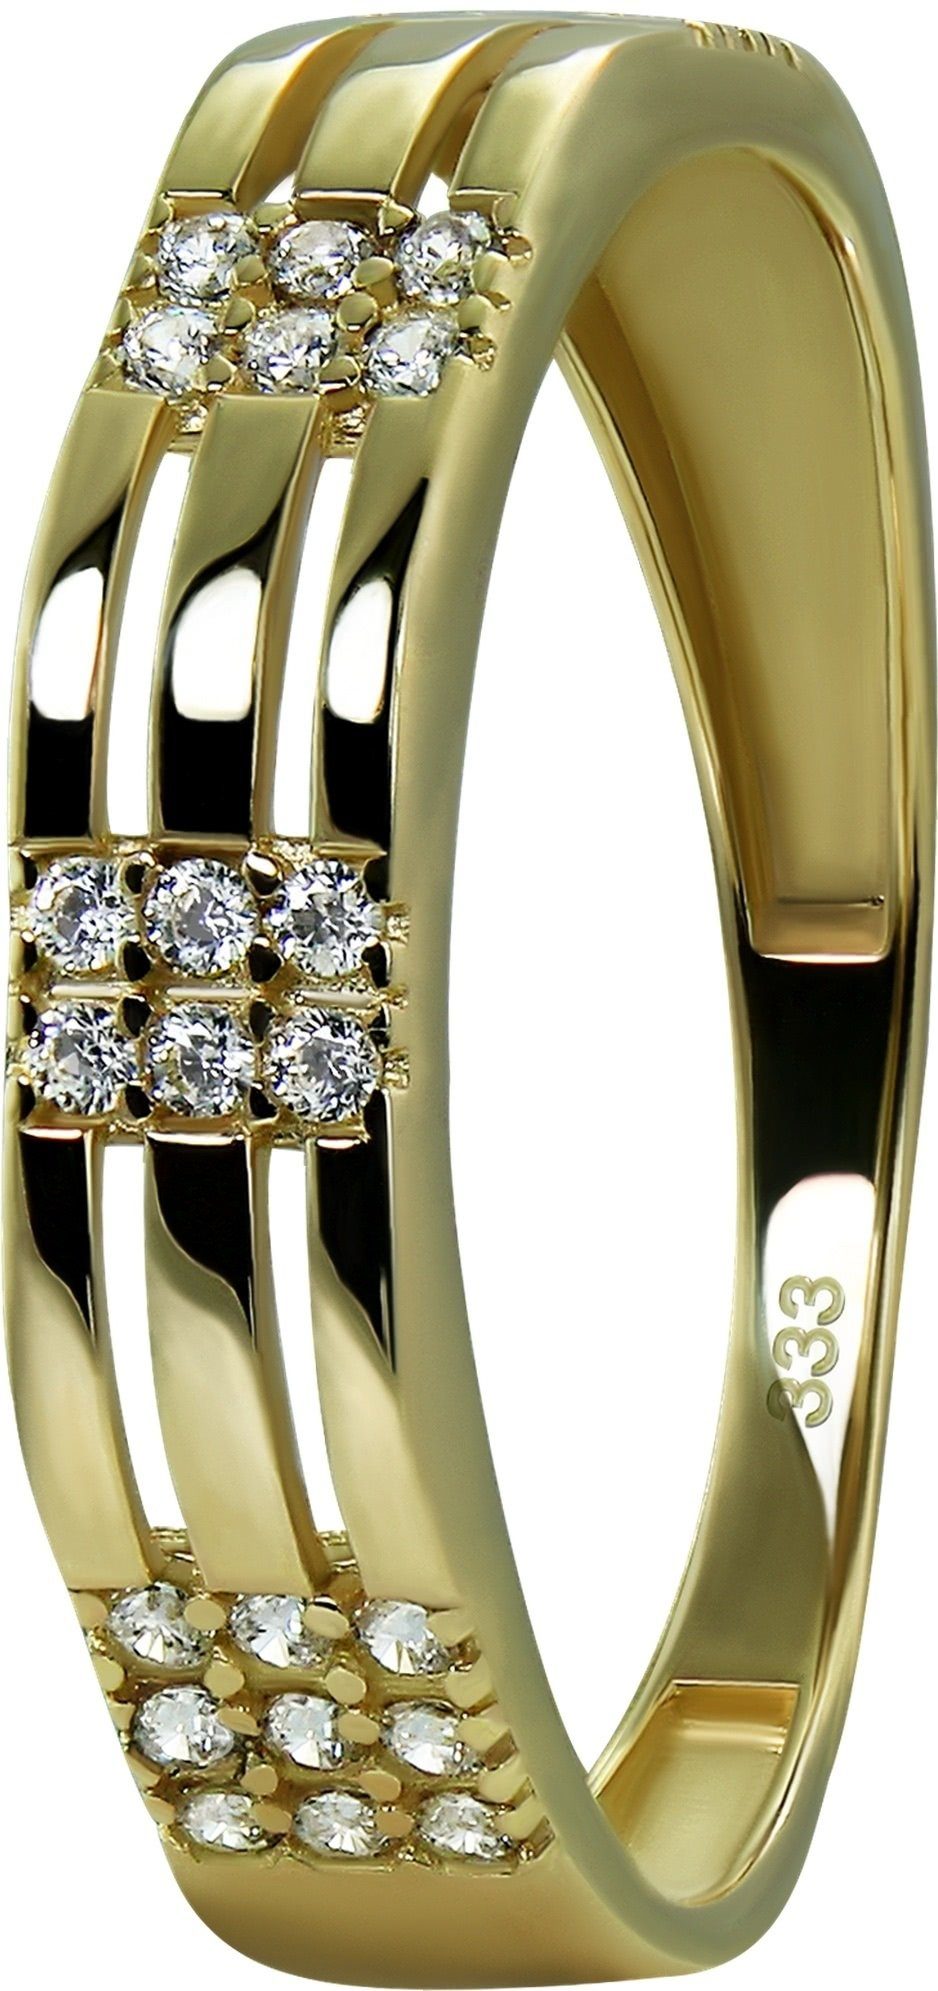 Gold Ring Sparkle - (Fingerring), GoldDream 333 GoldDream Gelbgold Sparkle Karat, Farbe: weiß Damen Goldring gold, Gr.58 8 Ring